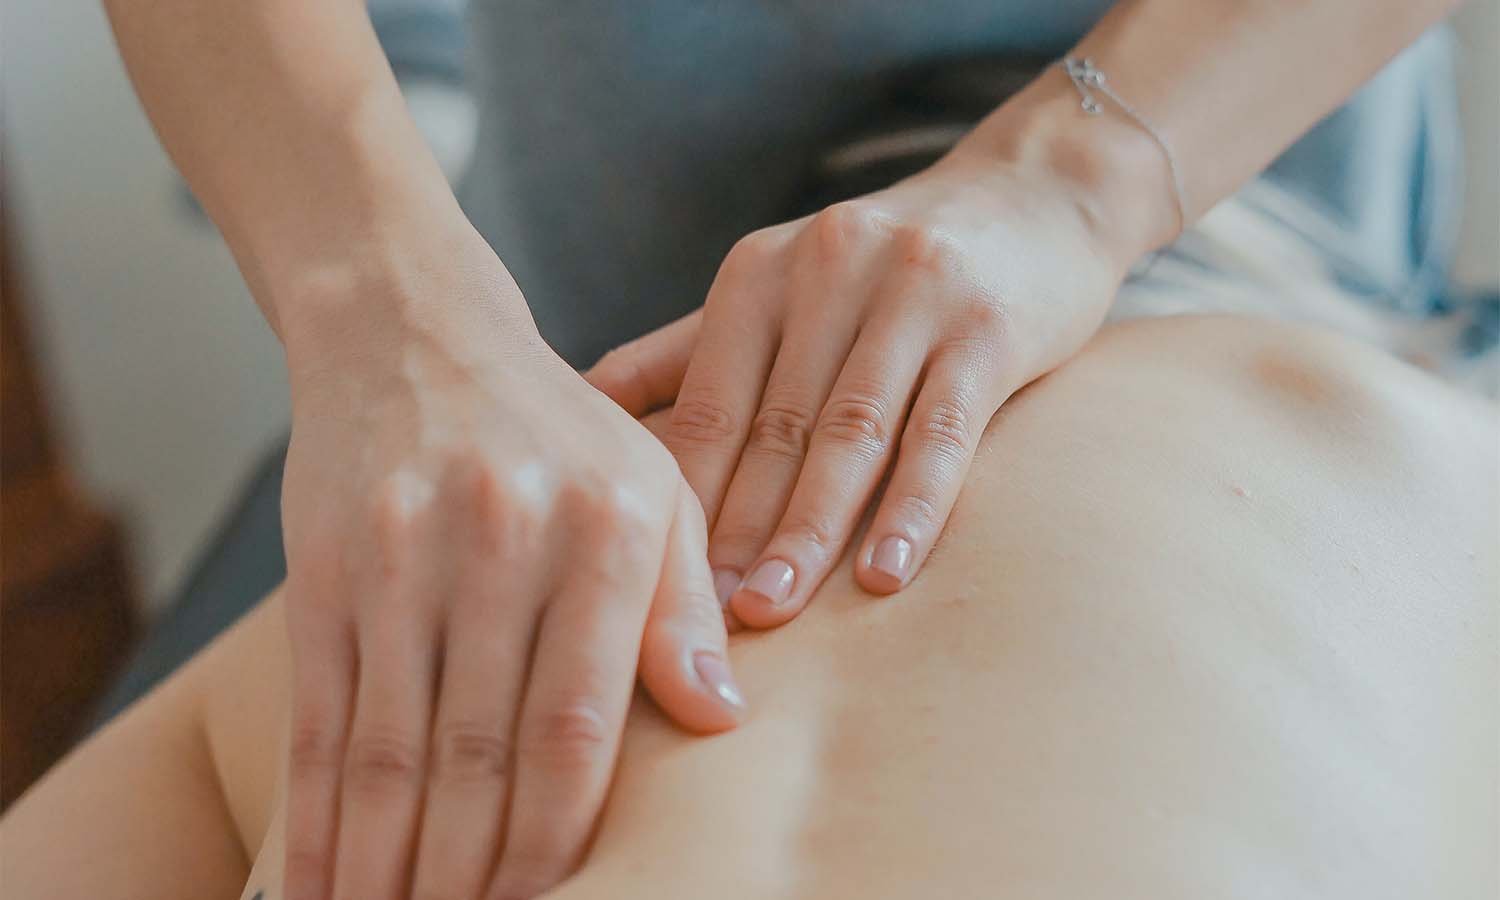 lympatic massage speeds up fat loss